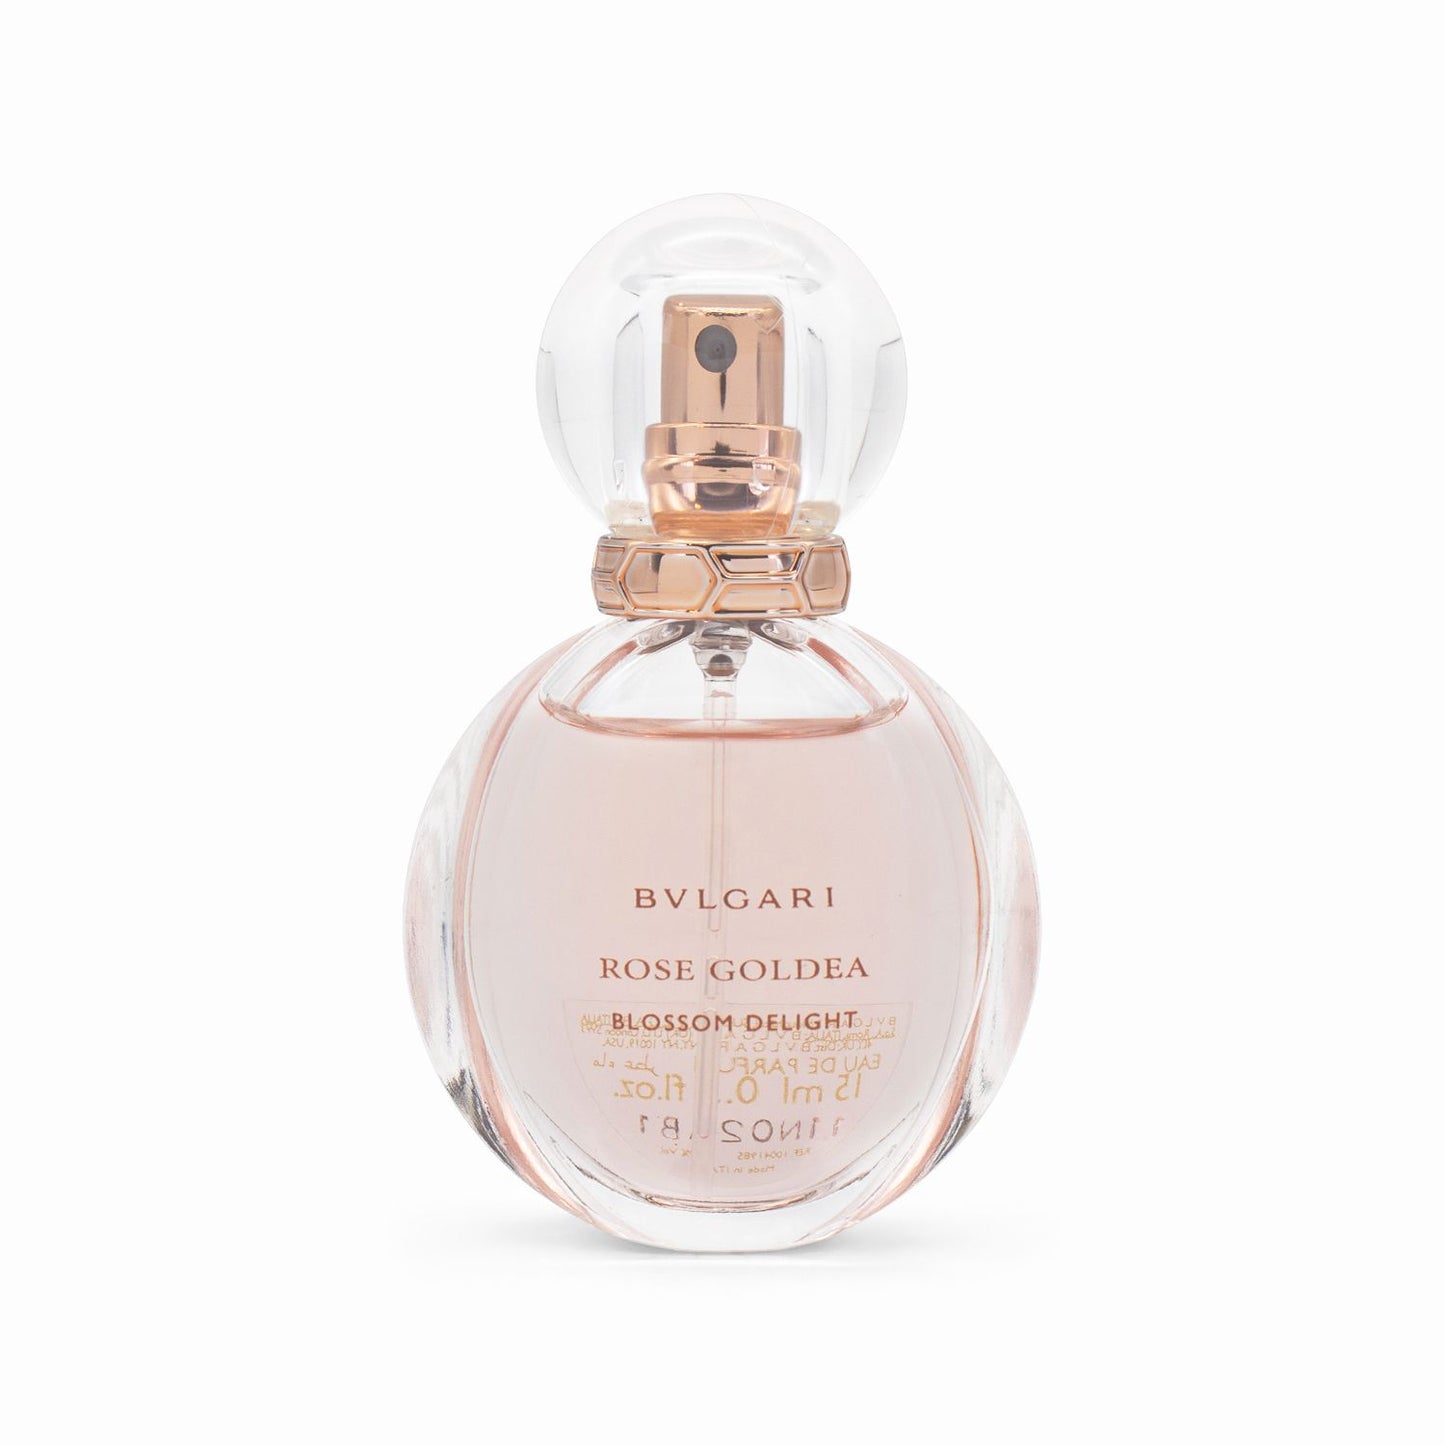 BVLGARI Rose Goldea Blossom Delight Eau De Parfum 15ml - Imperfect Box